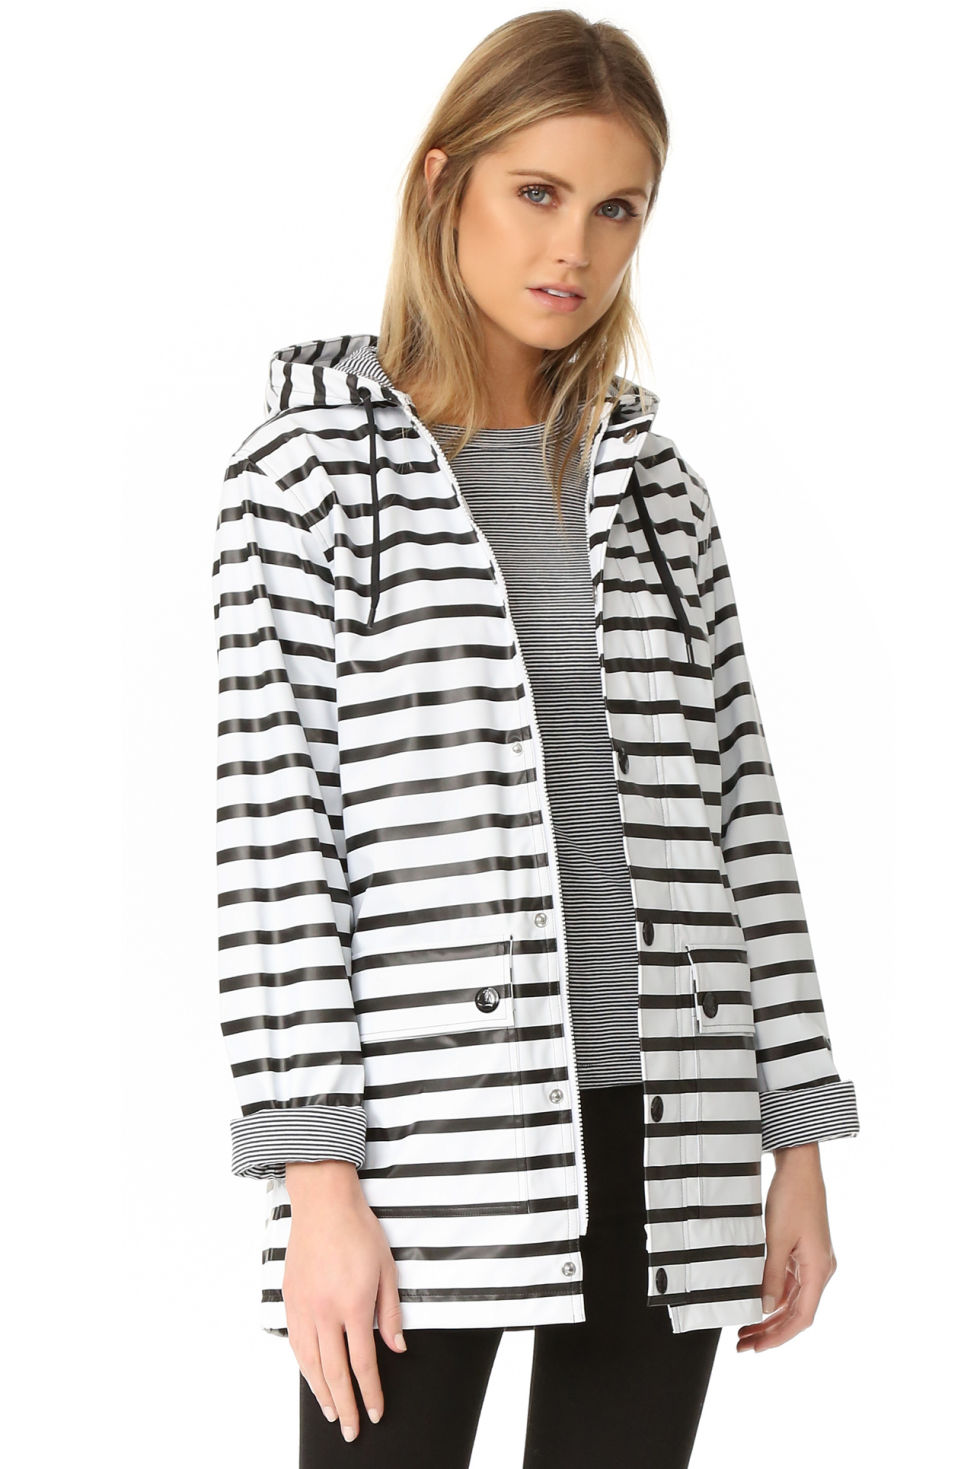 15 cute spring raincoats - best raincoats for women MFBQKHO